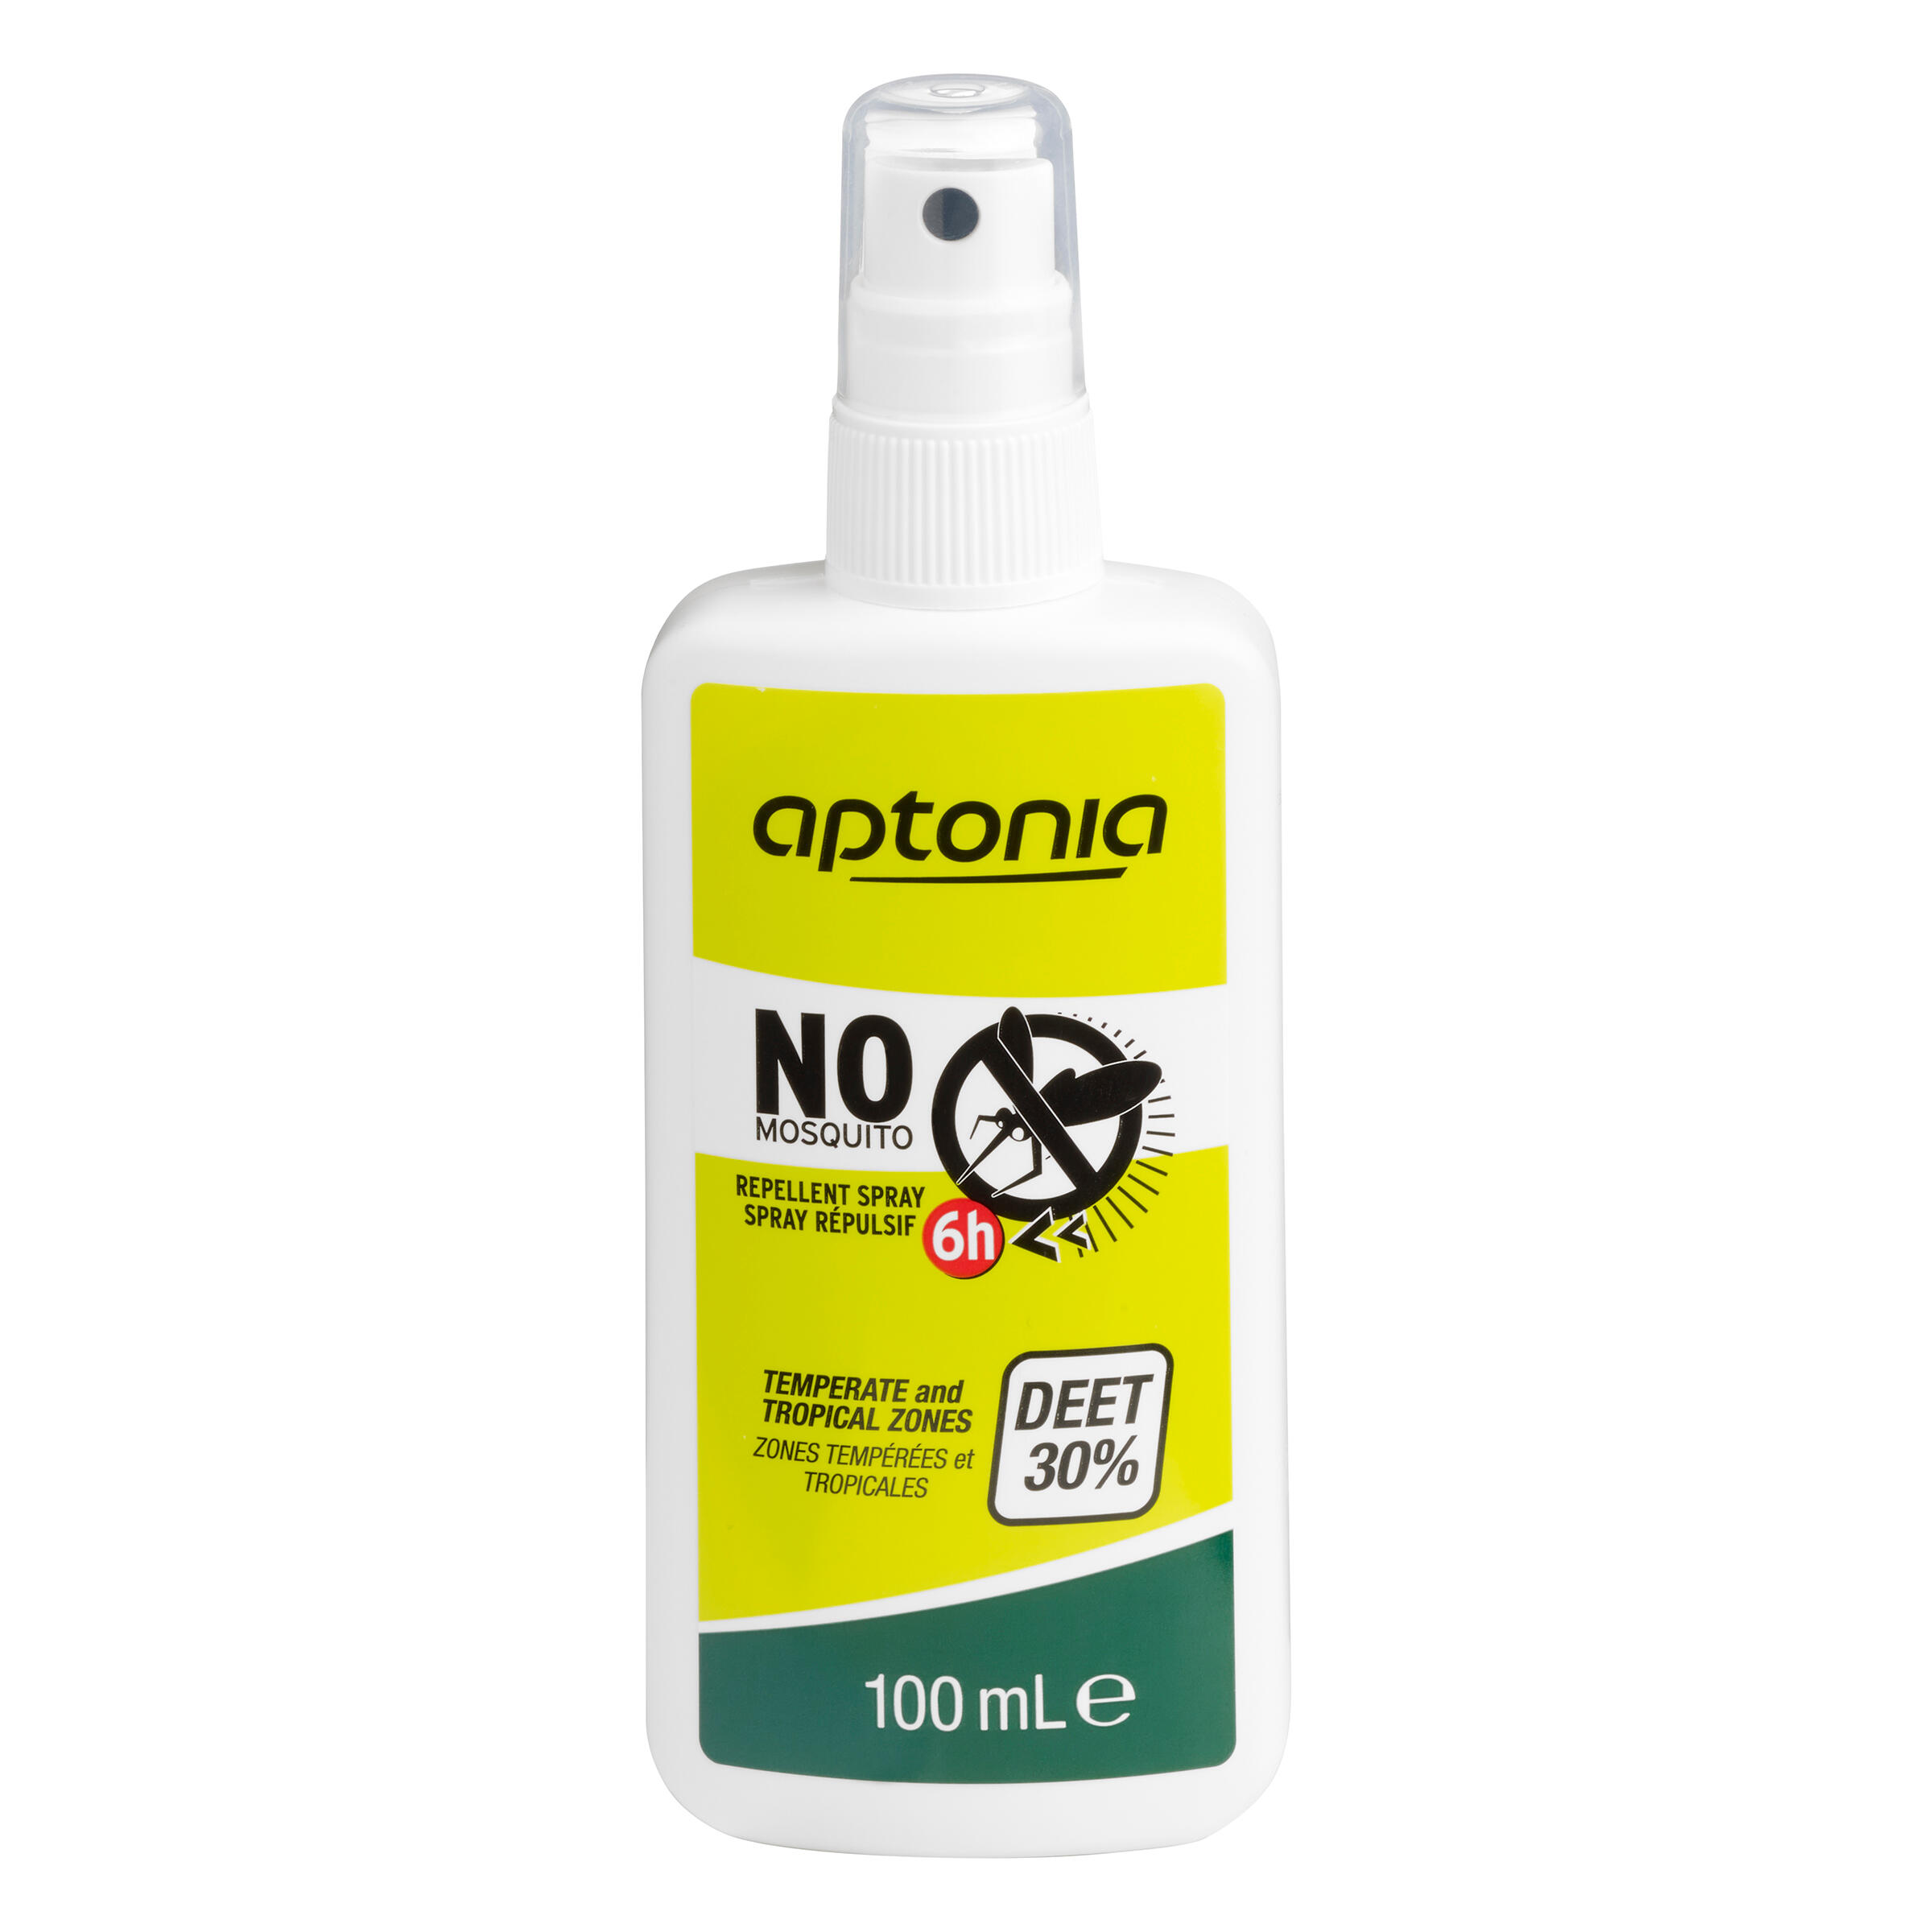 Aptonia Deet Insect Repellent Spray 